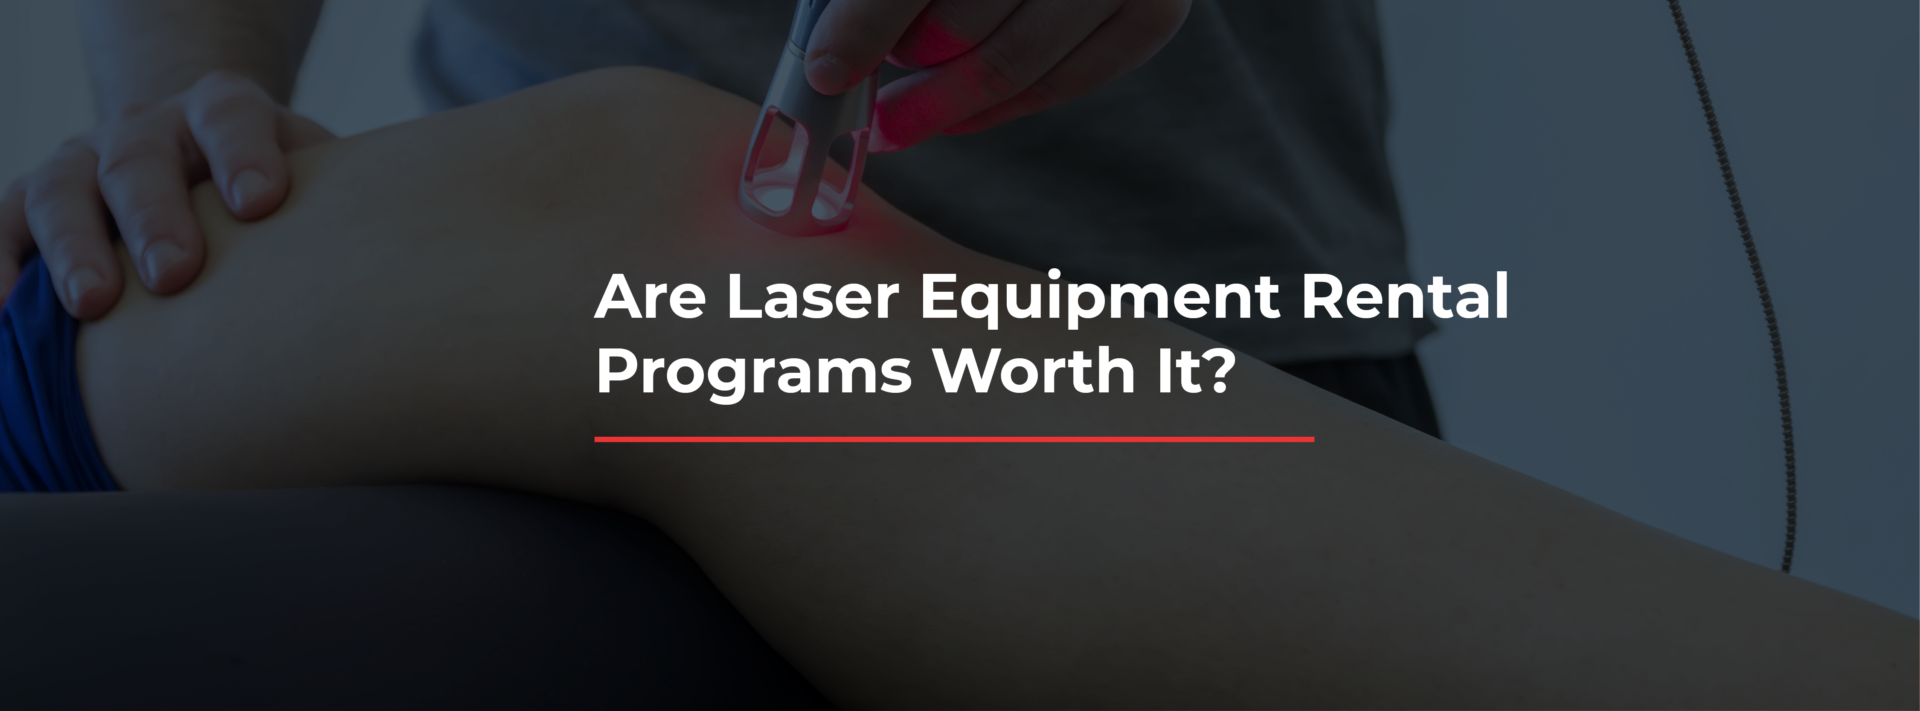 Are laser equipment rentals worth it